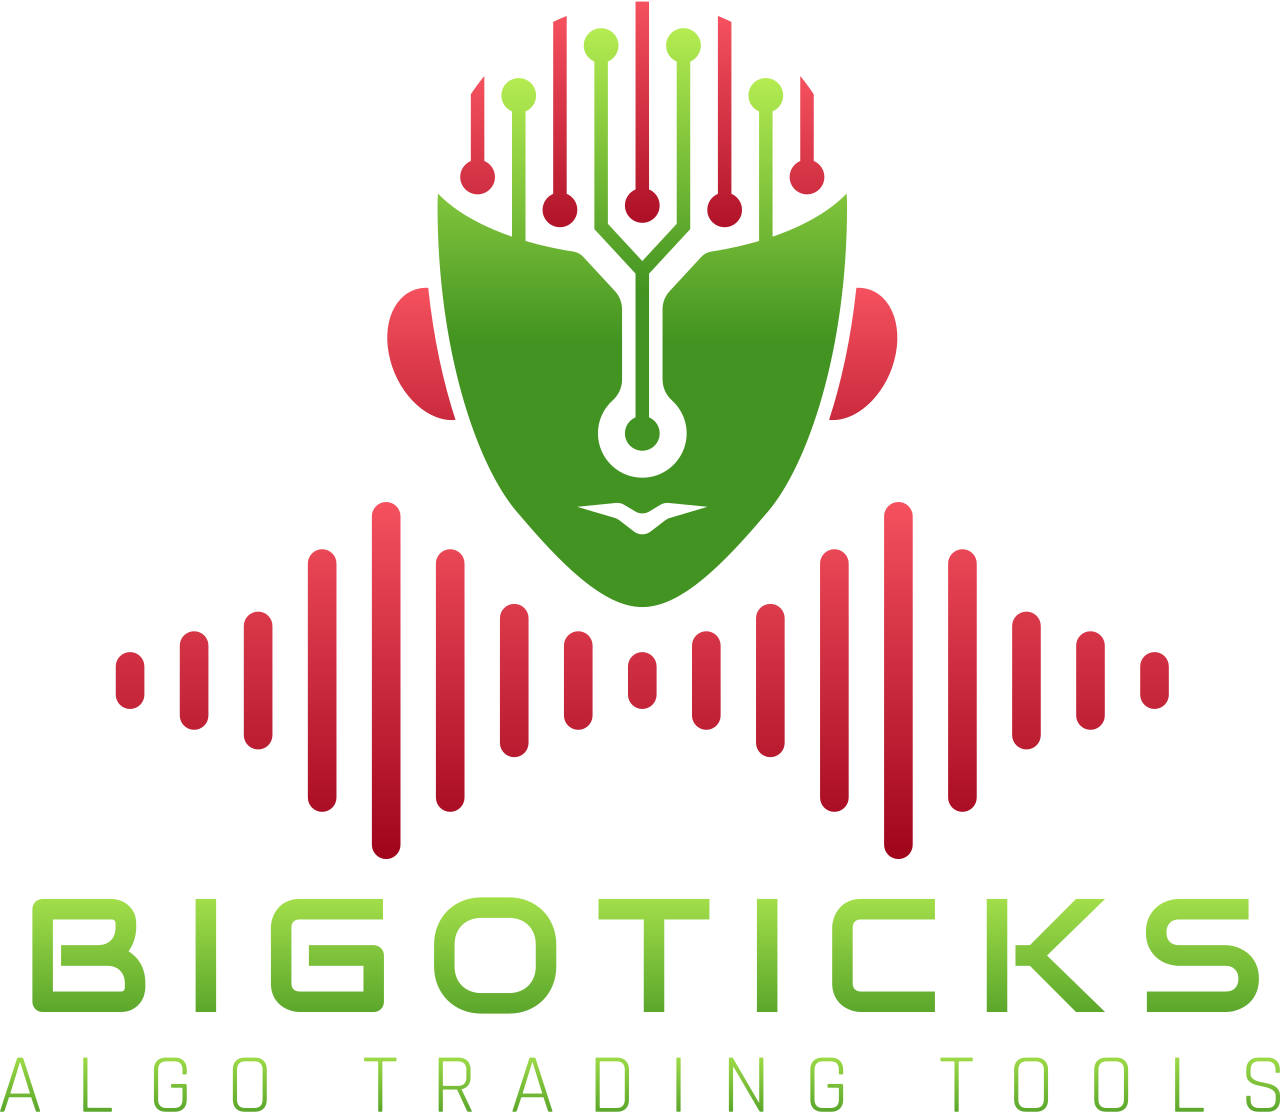 Bigoticks's logo